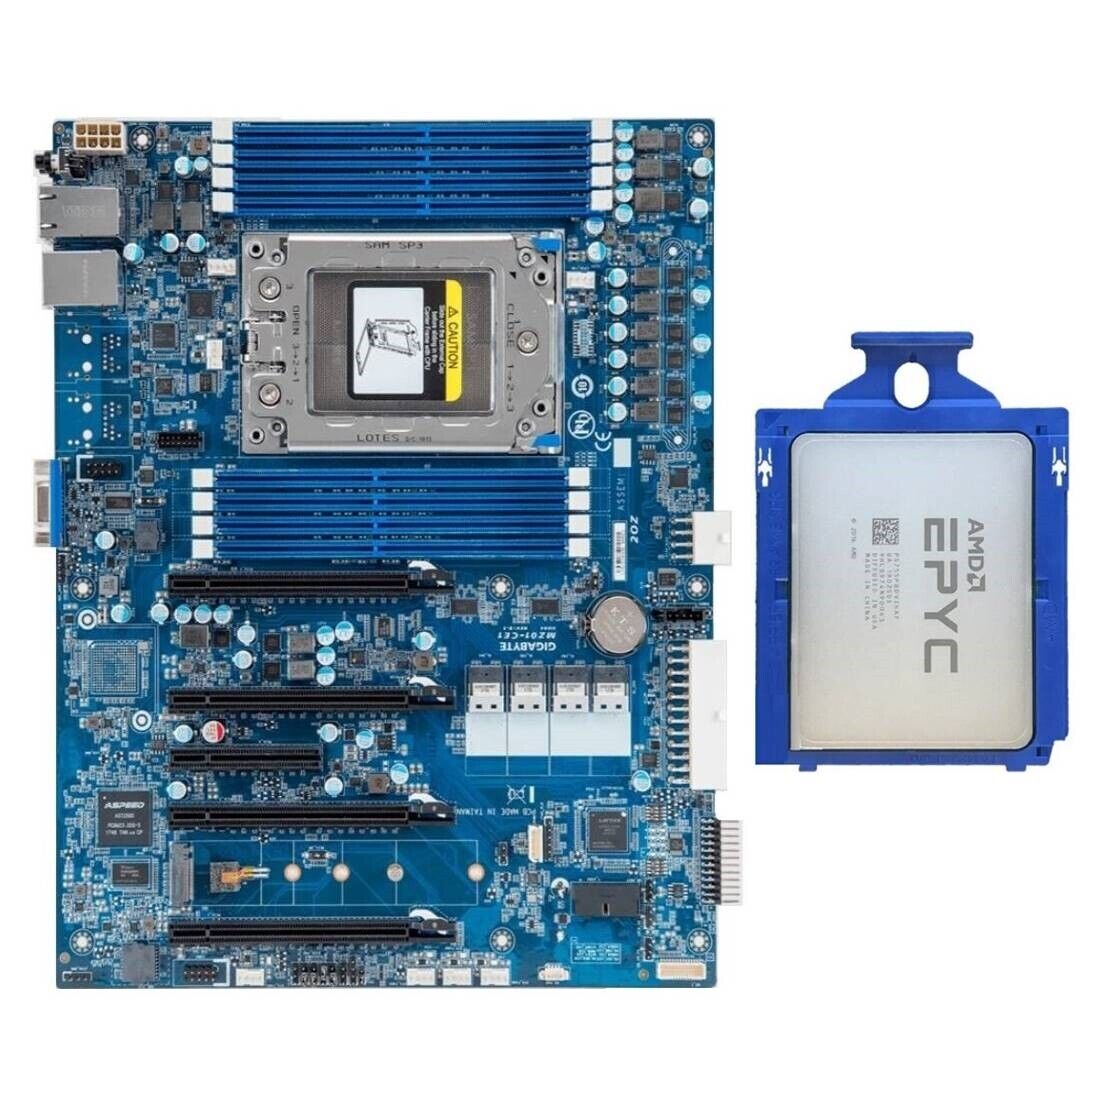 Gigabyte MZ01-CE1 Server ATX Motherboard + AMD EPYC 7551P CPU Processor Combos